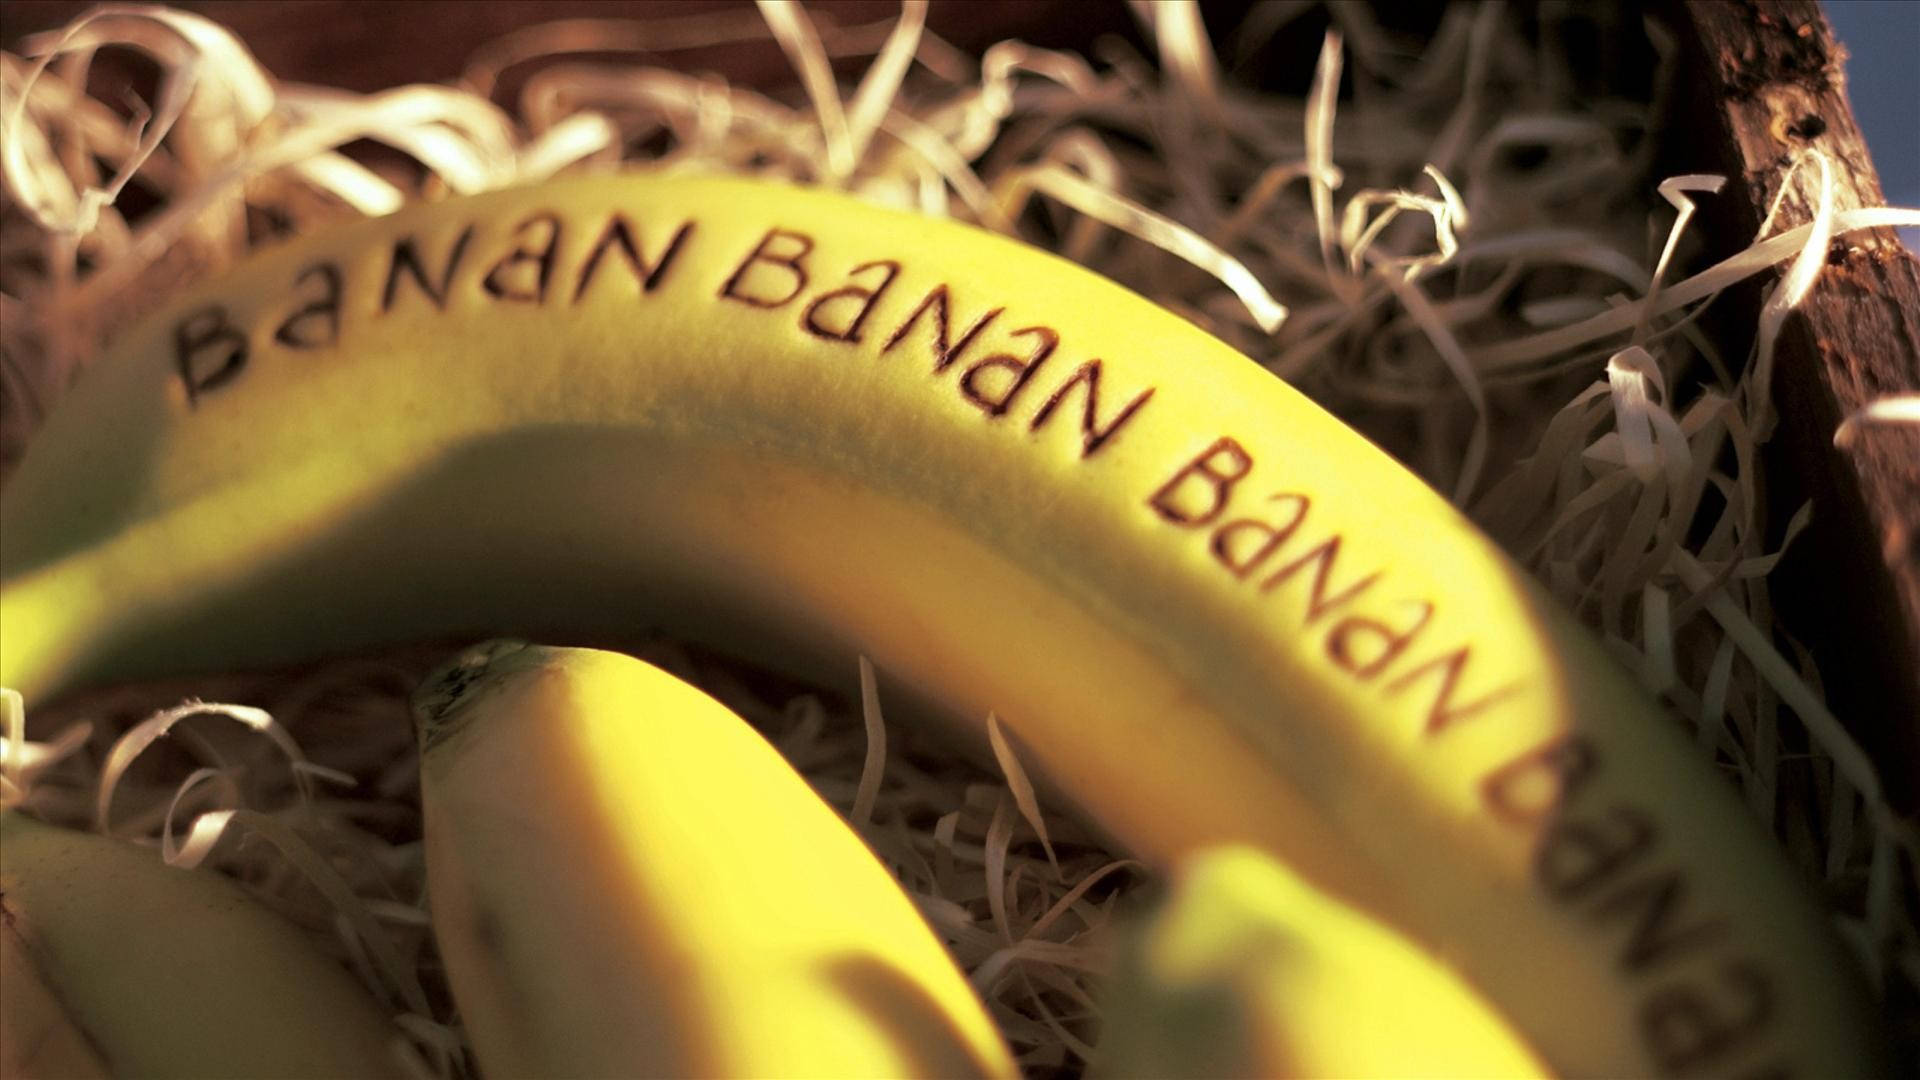 Banana Carved Lettering Wallpaper